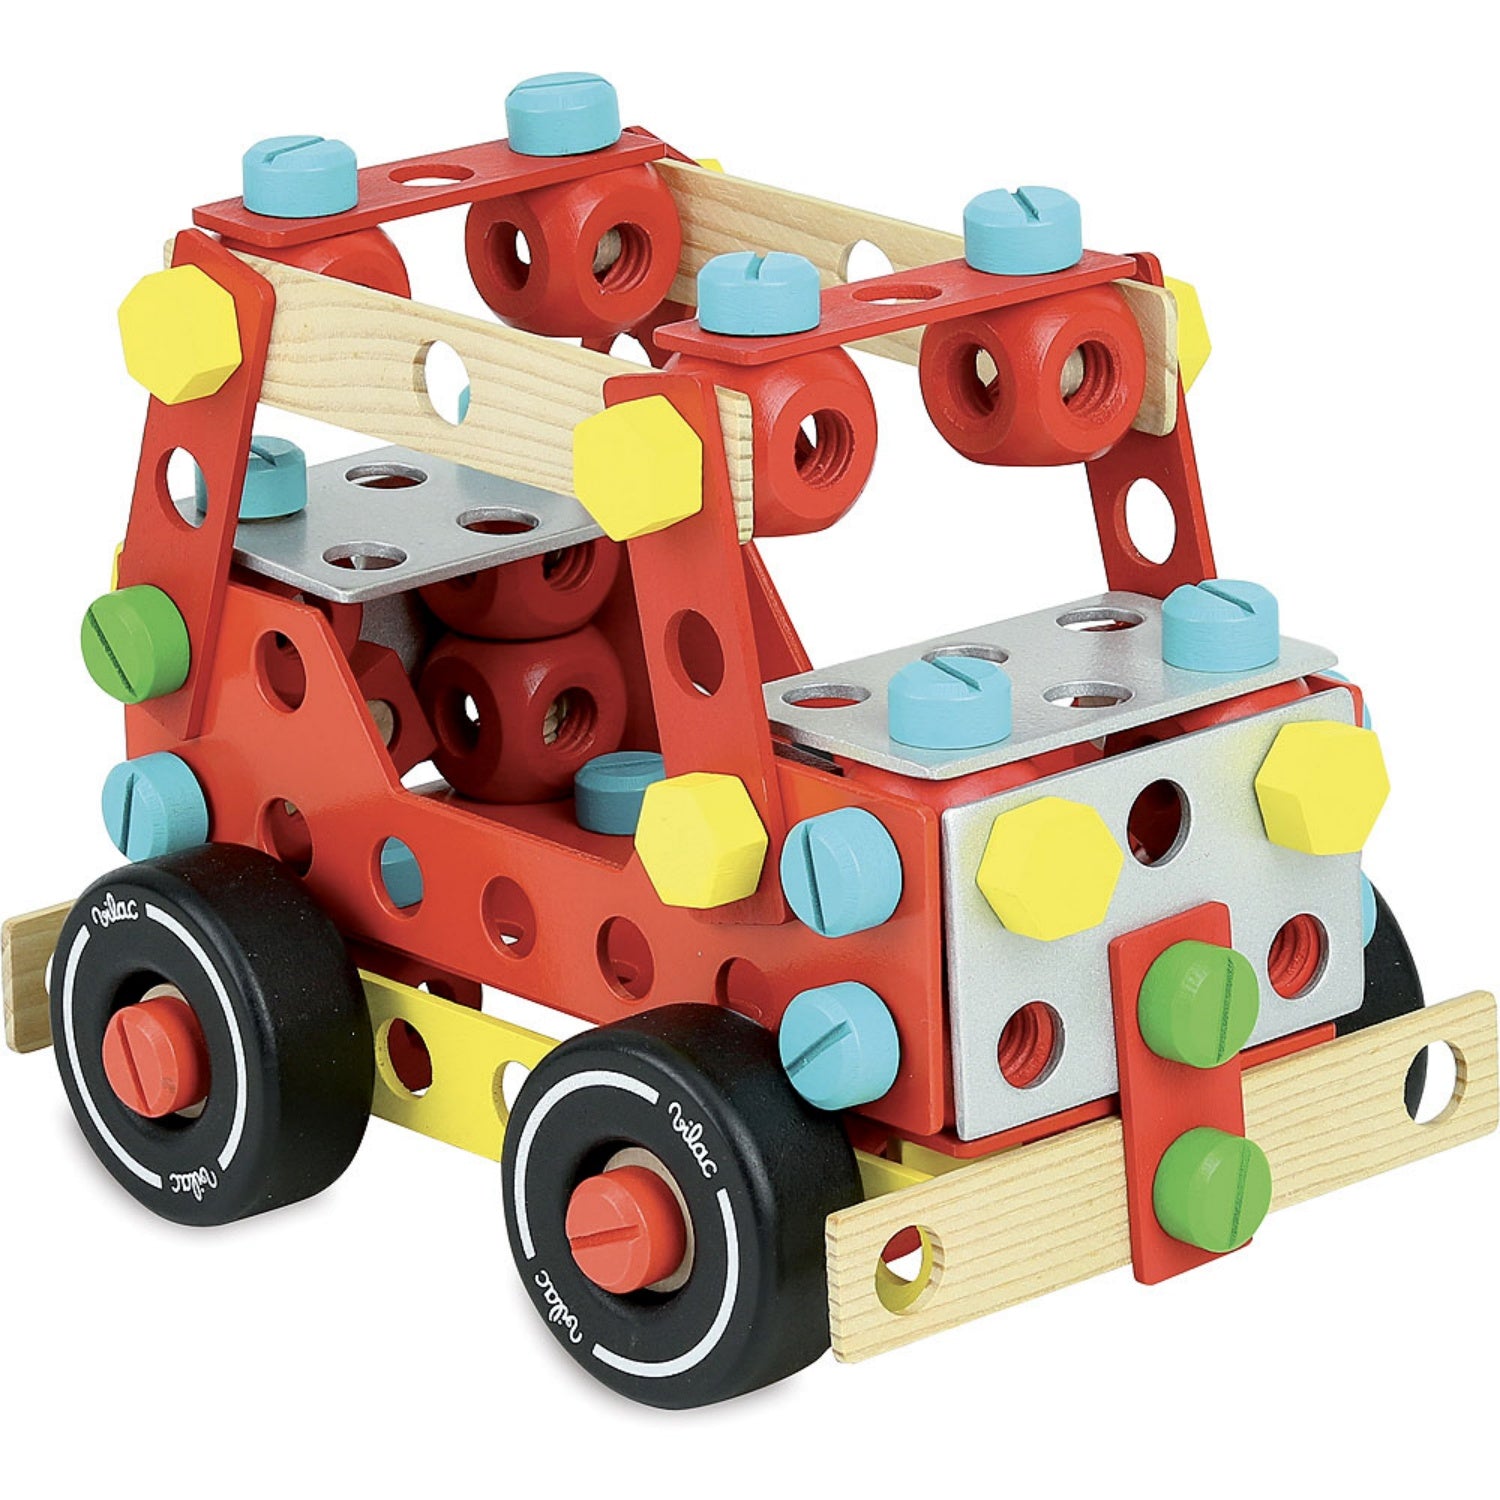 Vilac Wooden Construction Building Set ‘Super Batibloc’ | Educational Wooden Toy | SUV | BeoVERDE.ie